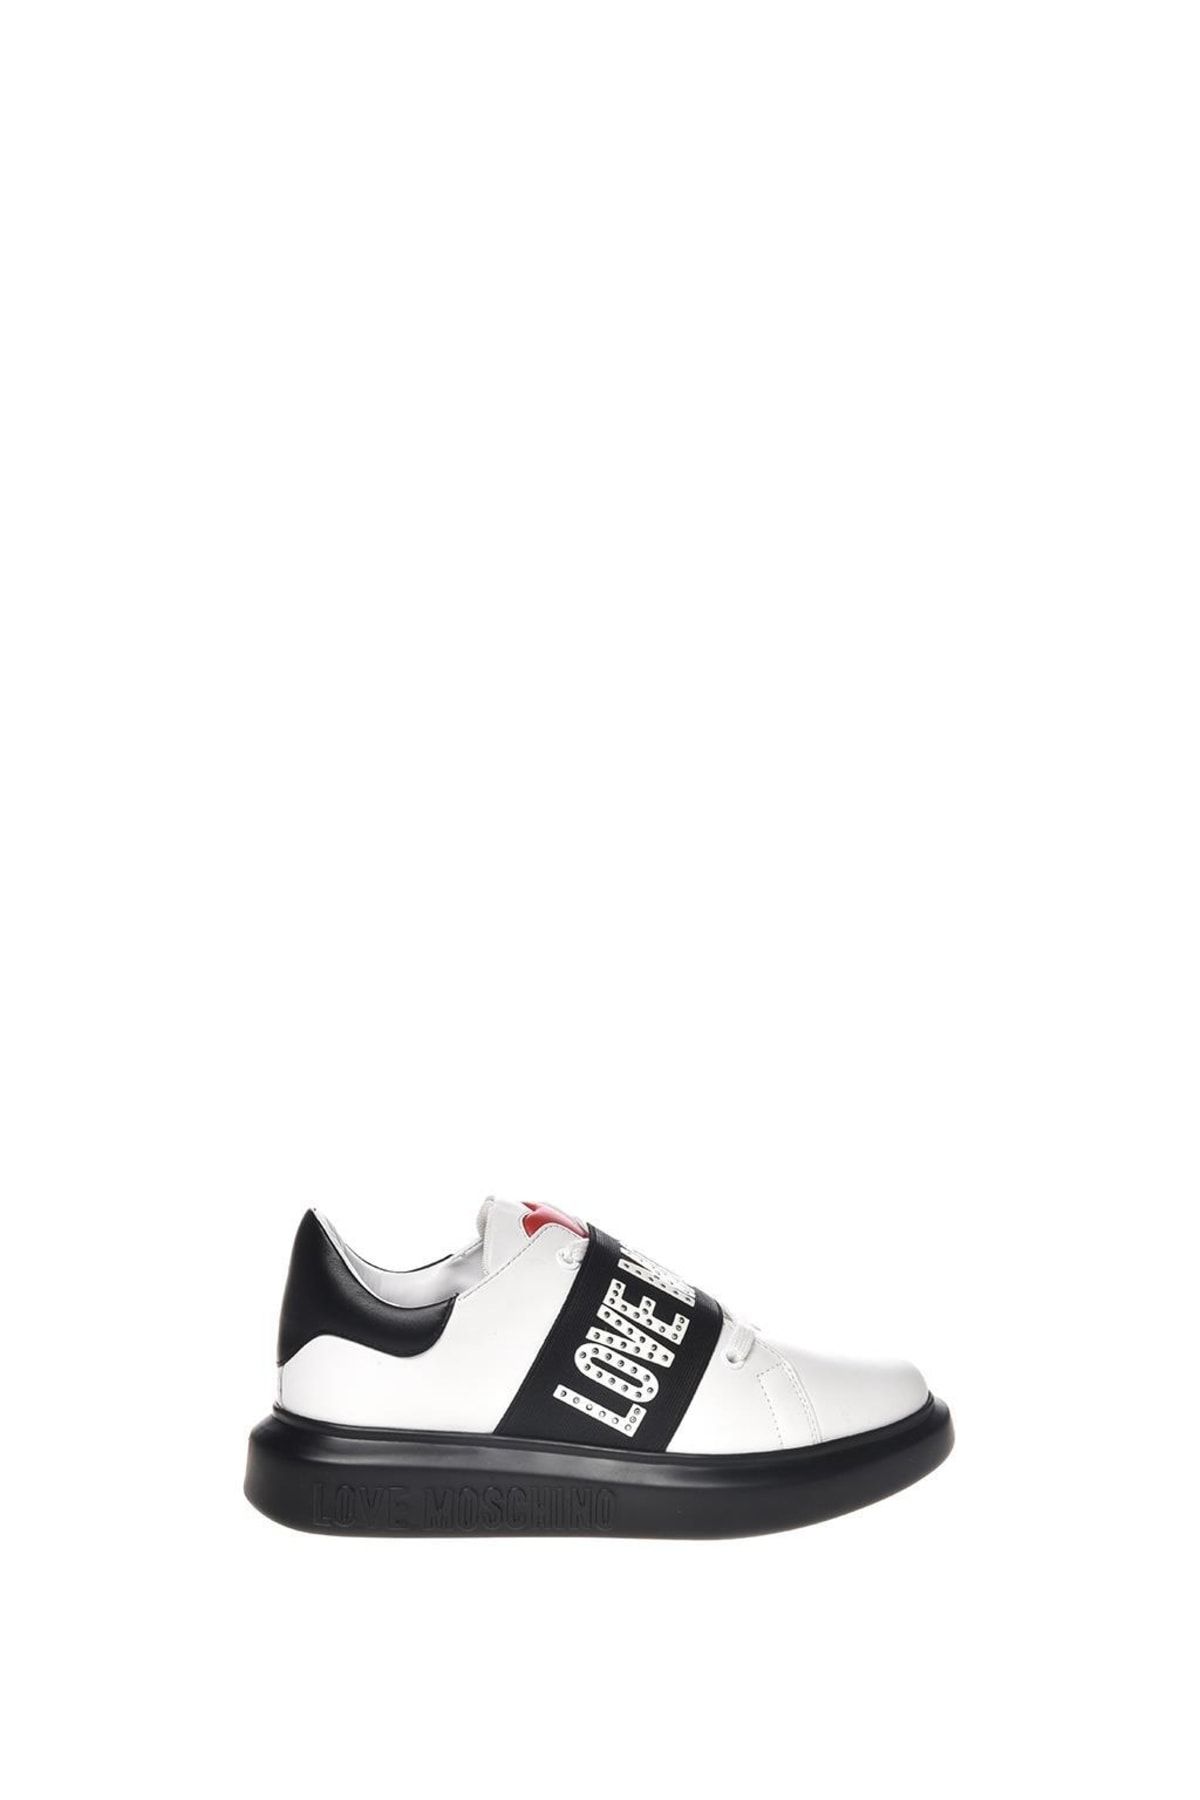 Moschino Sneaker Kadın Ayakkabı Ja15084g1f